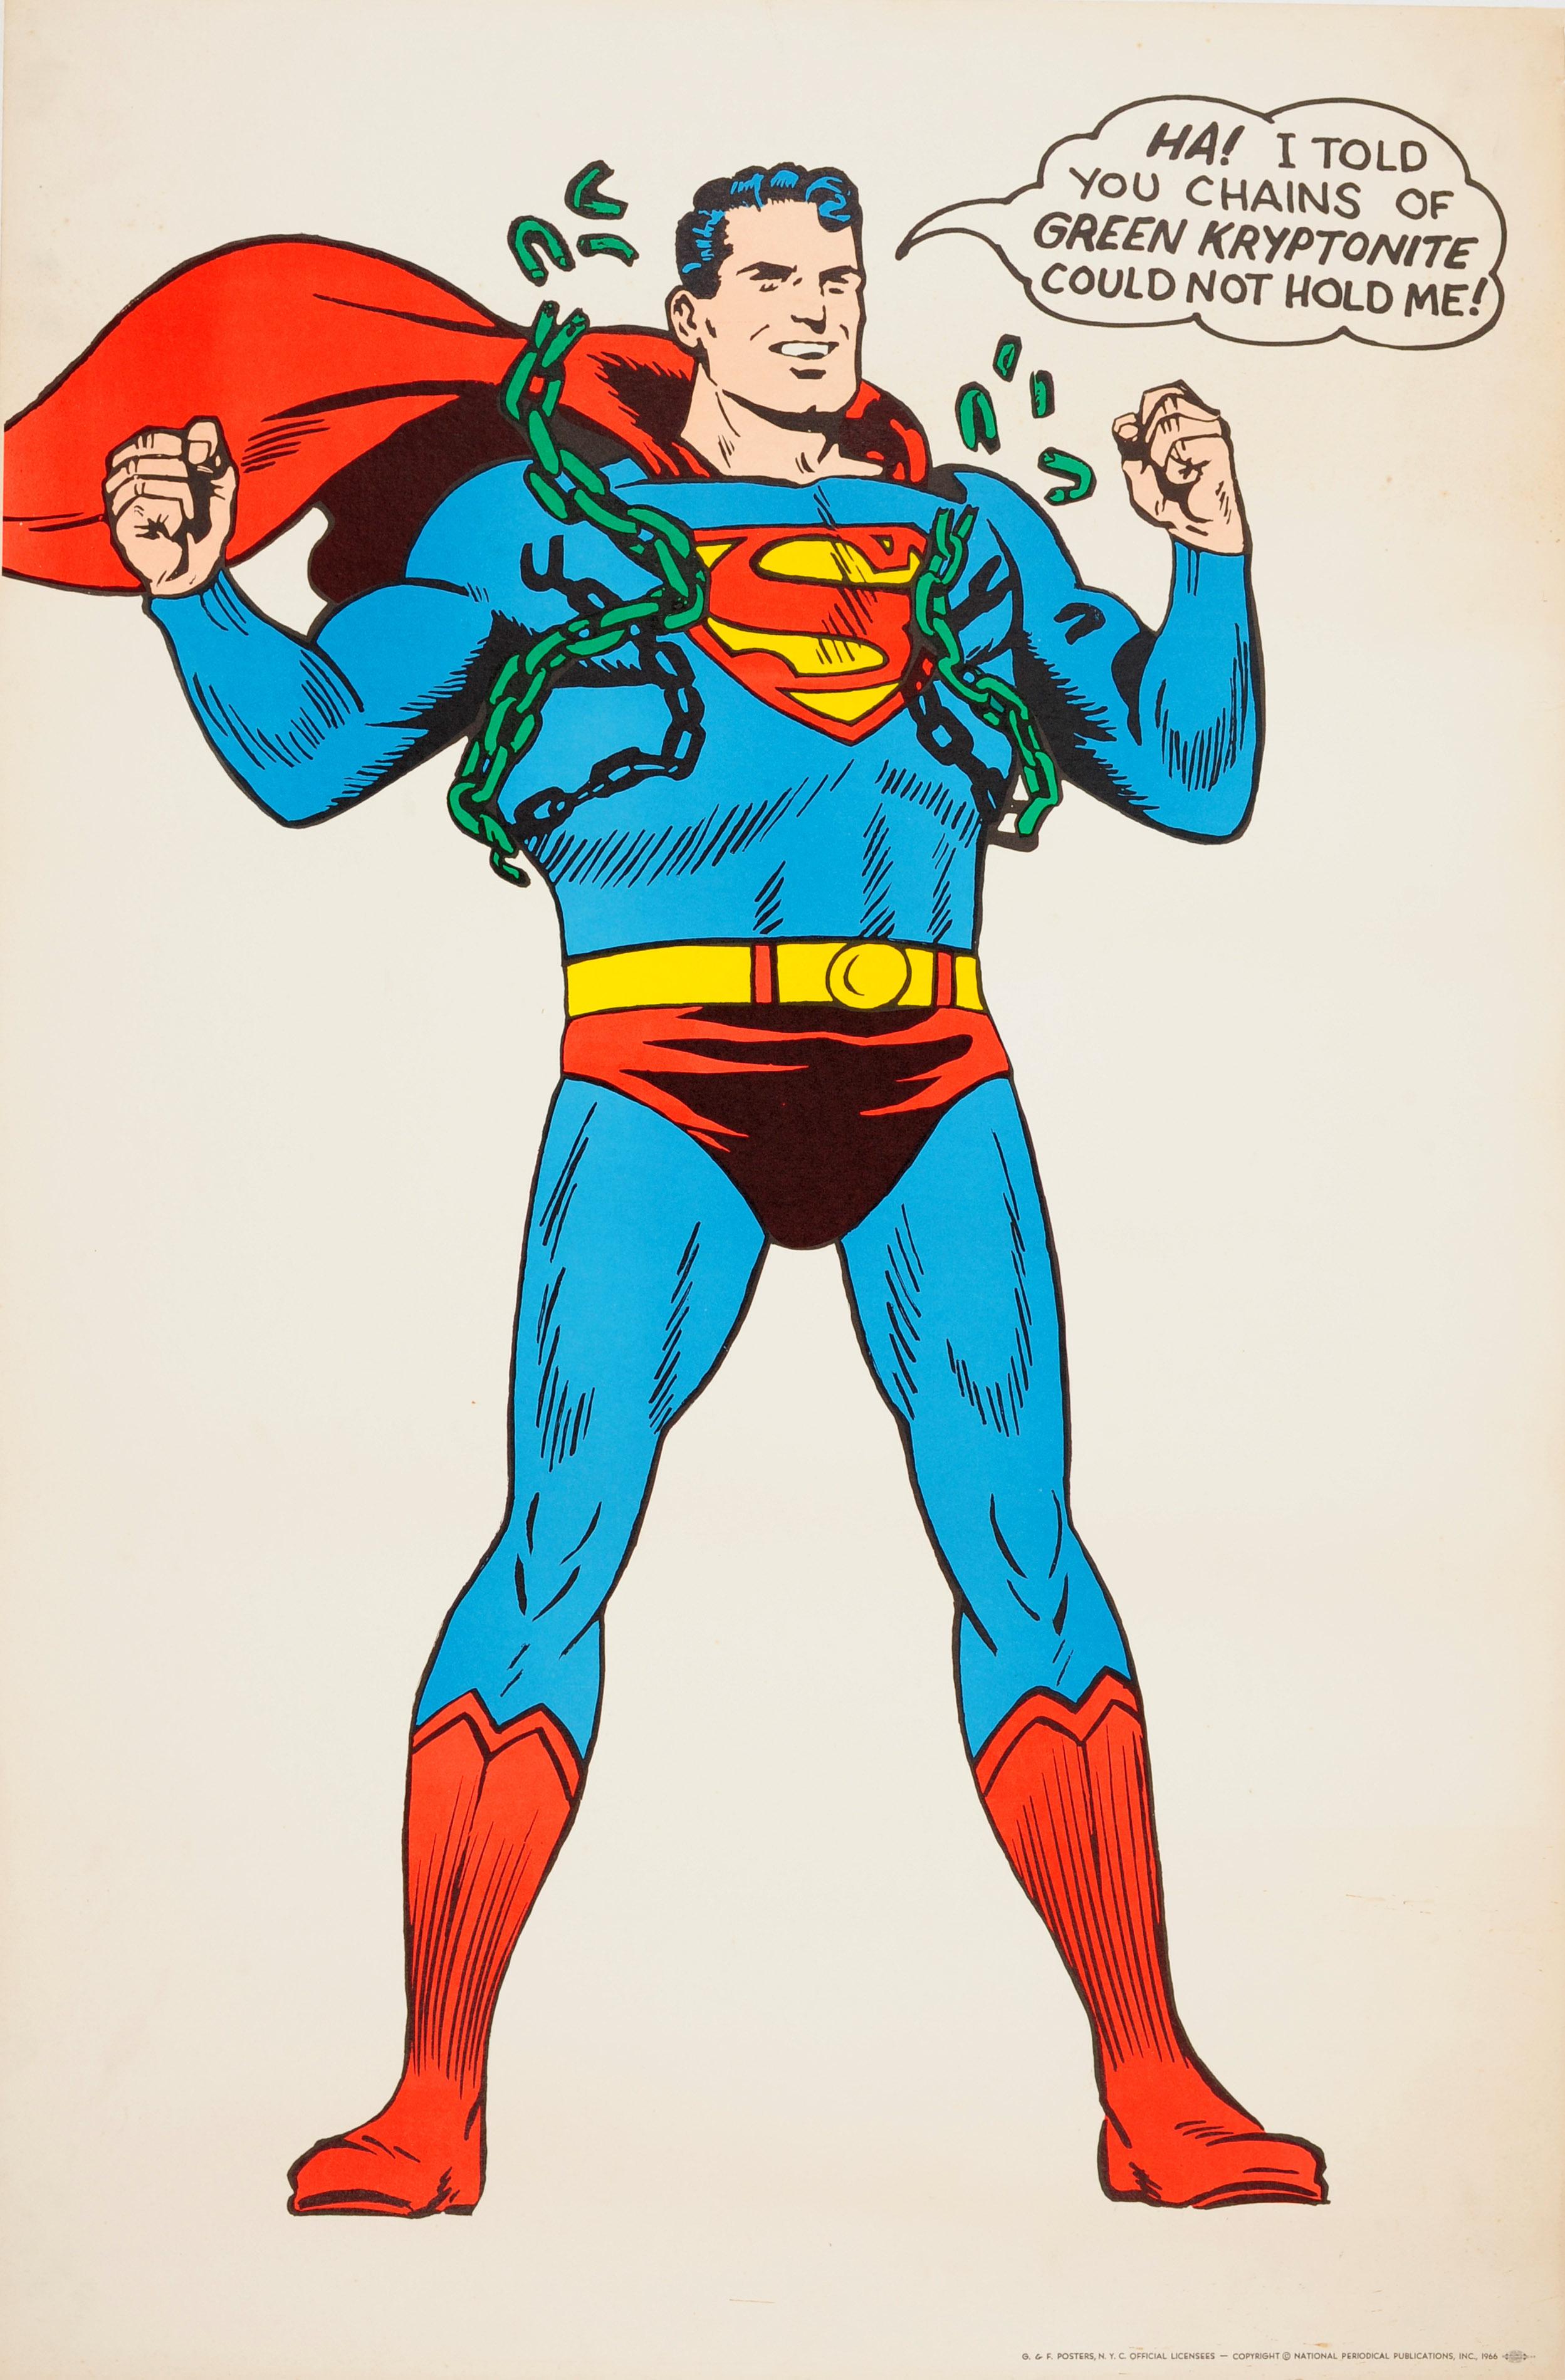 Unknown Print - Original Vintage Superman Poster Ft Comics Superhero Free From Kryptonite Chains